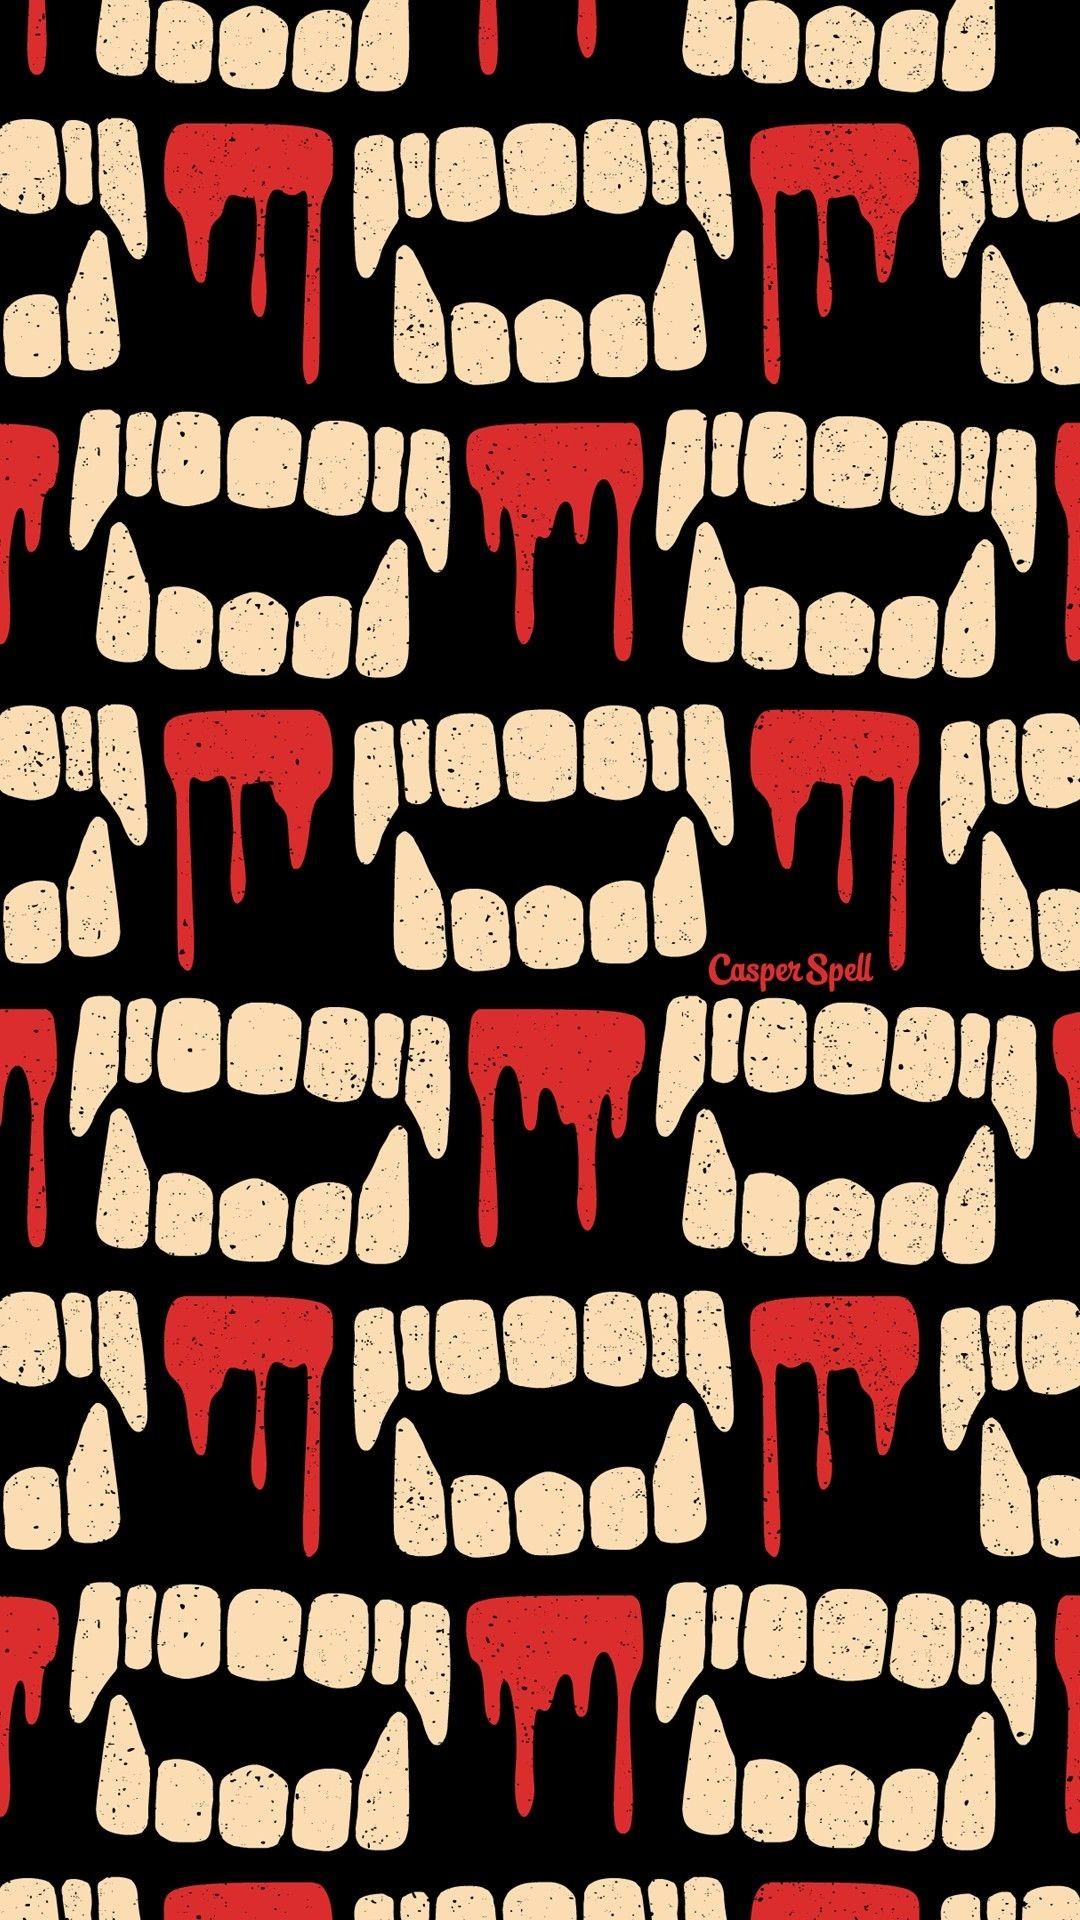 Blood on the teeth wallpaper - Vampire